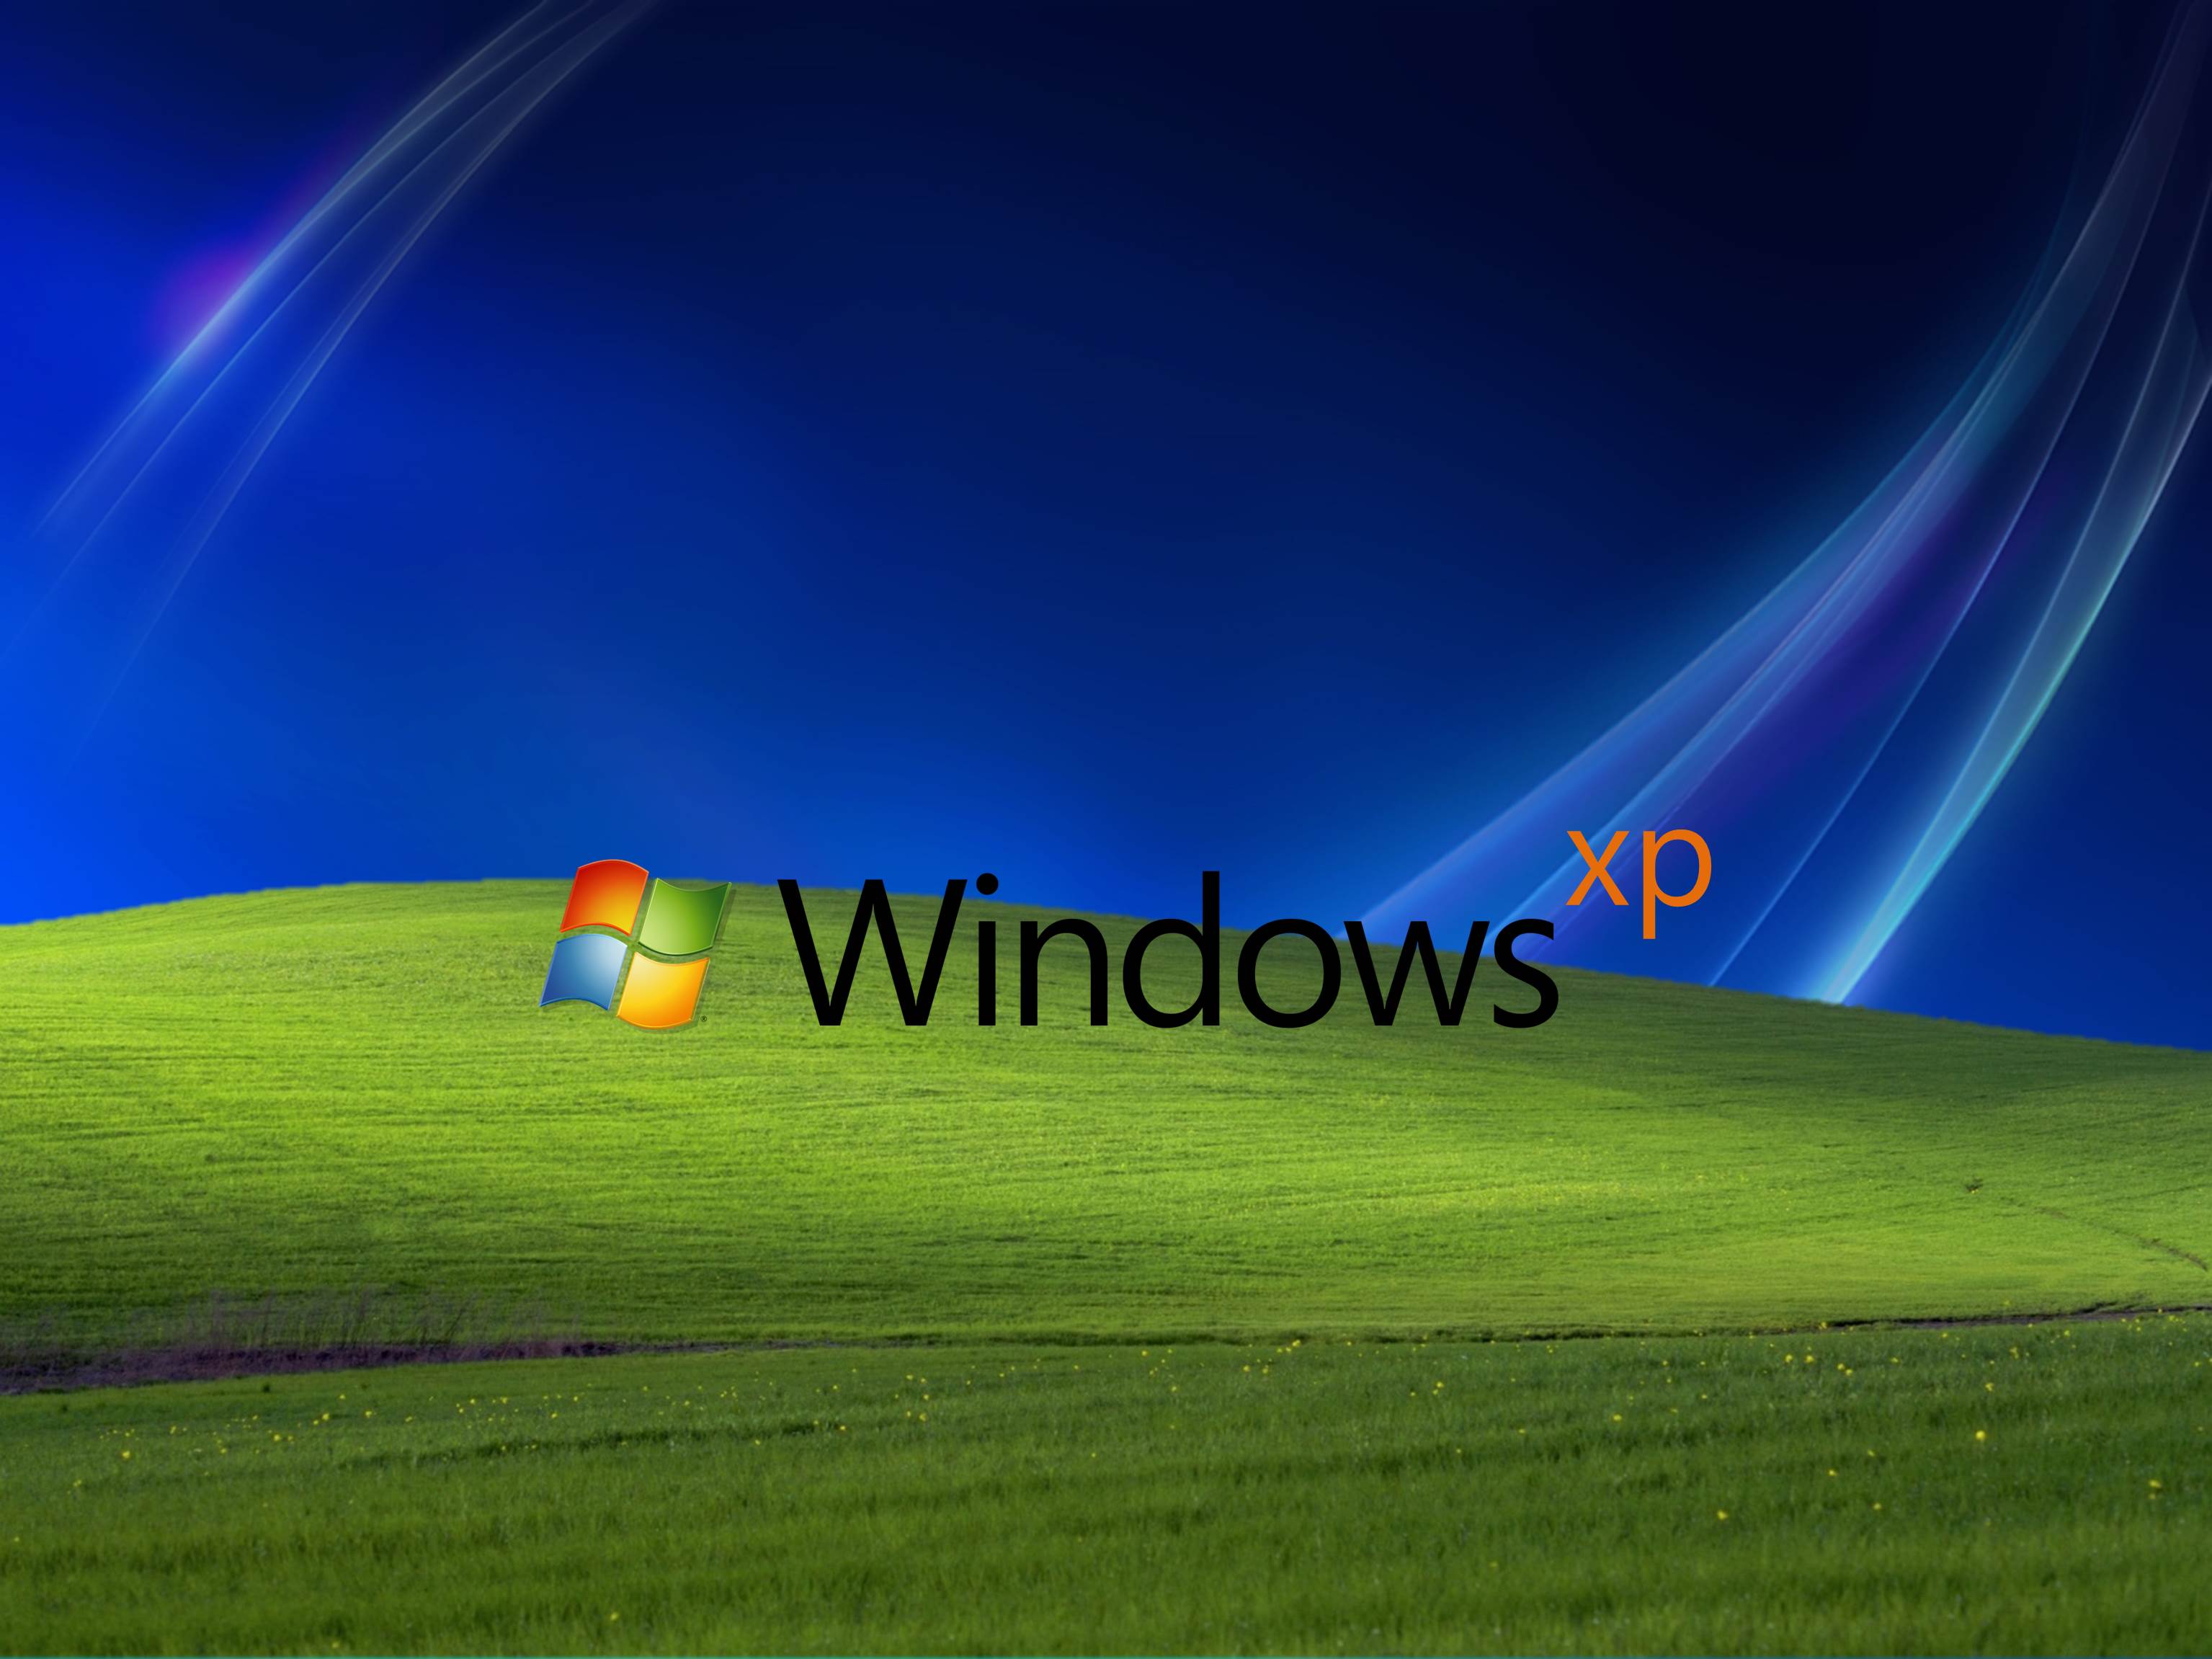 Windows-XP-Wallpaper-5.jpeg